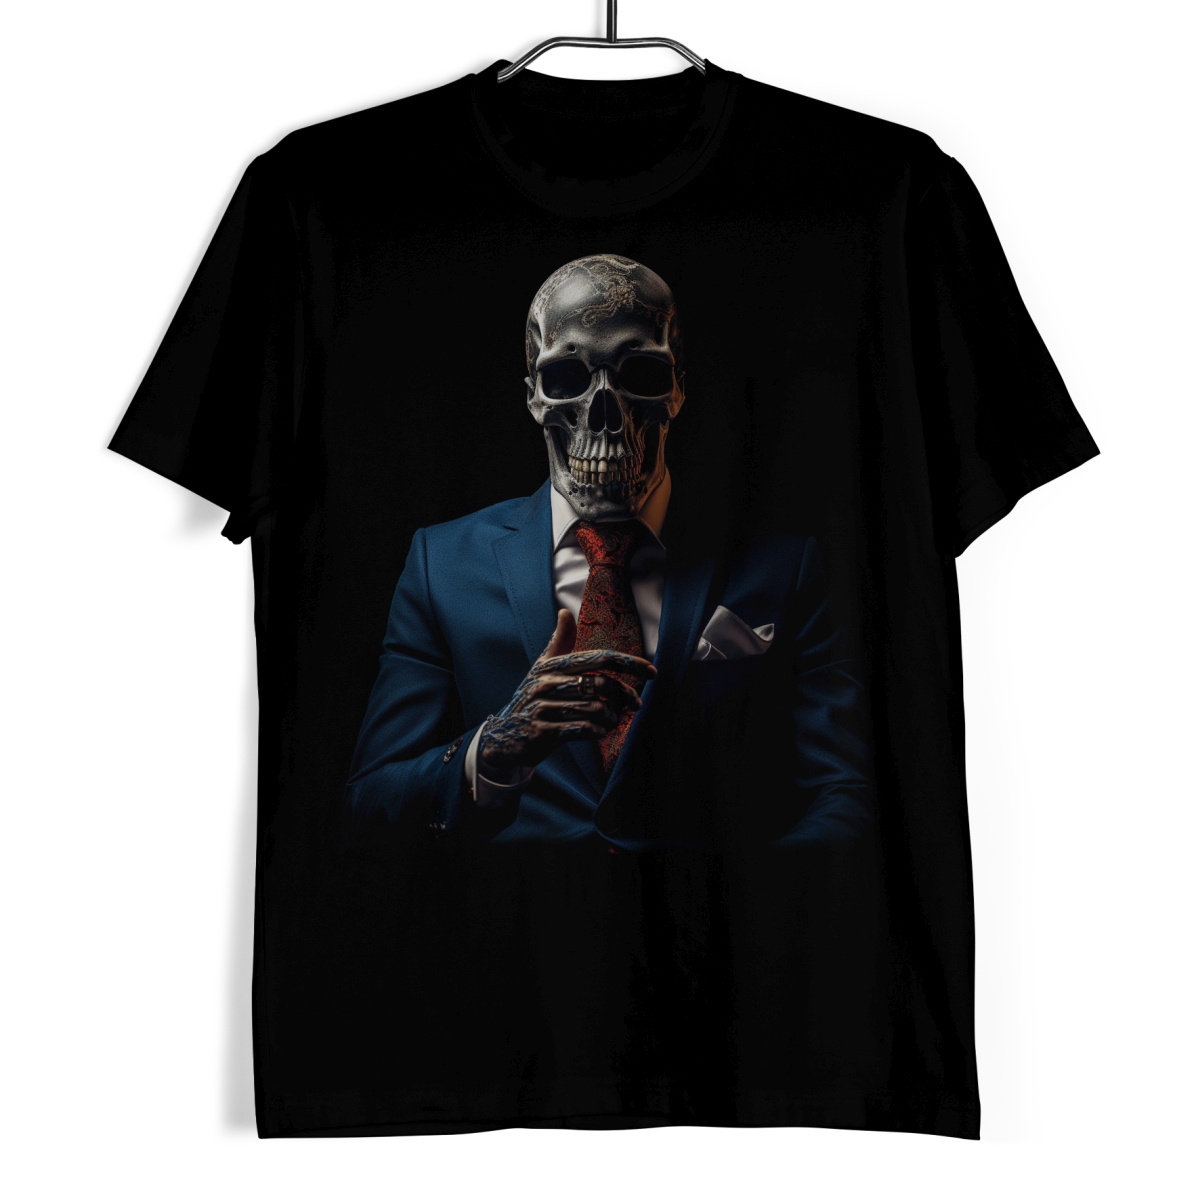 Tričko s lebkou - Elegance smrti XXL